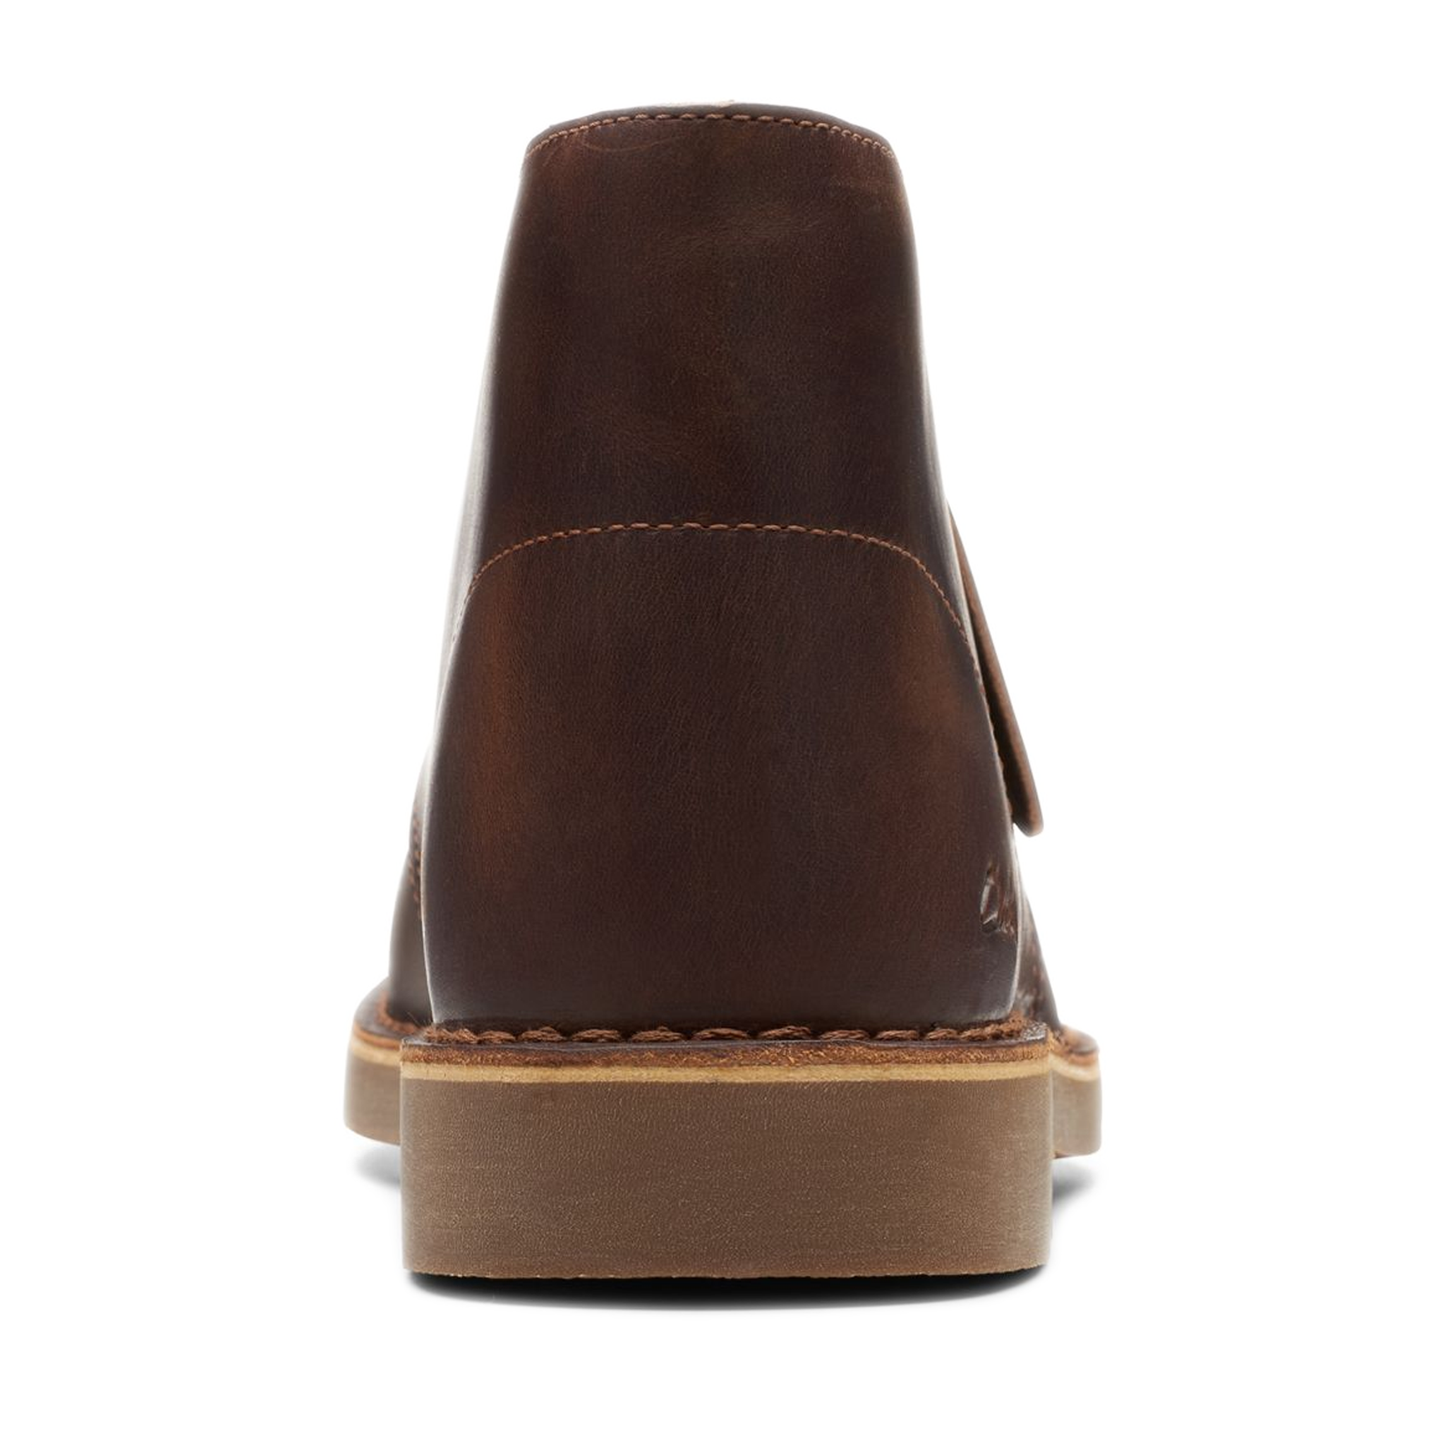 Men's Clarks Desert Boot 2 - Beeswax Leather